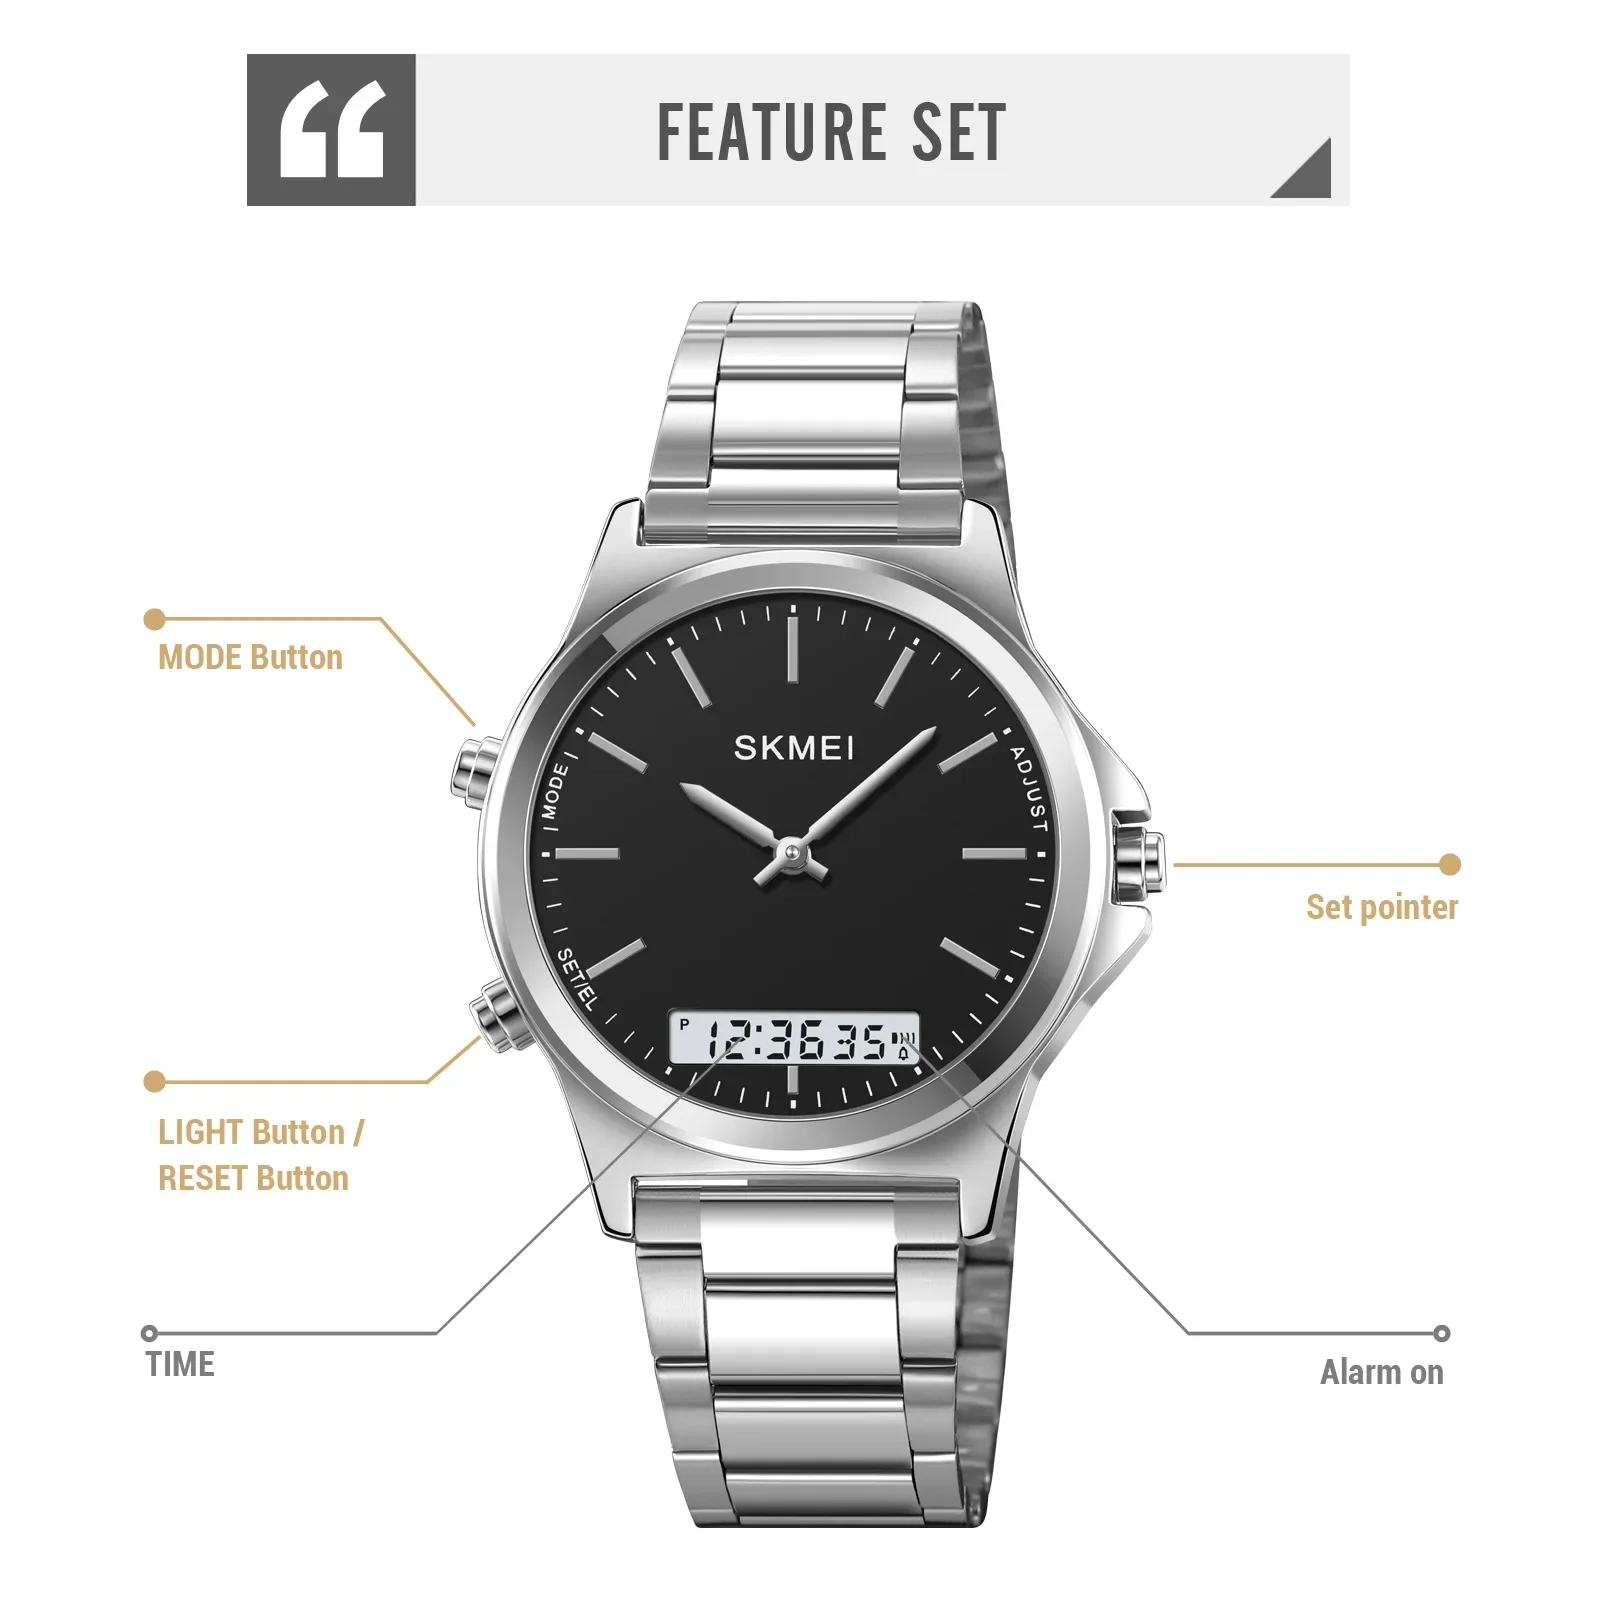 SKMEI Sport Watches Mens Waterproof Alarm Wristwatches Clock reloj hombre 3 Time Back Light Display Digital Chrono Watch 2120